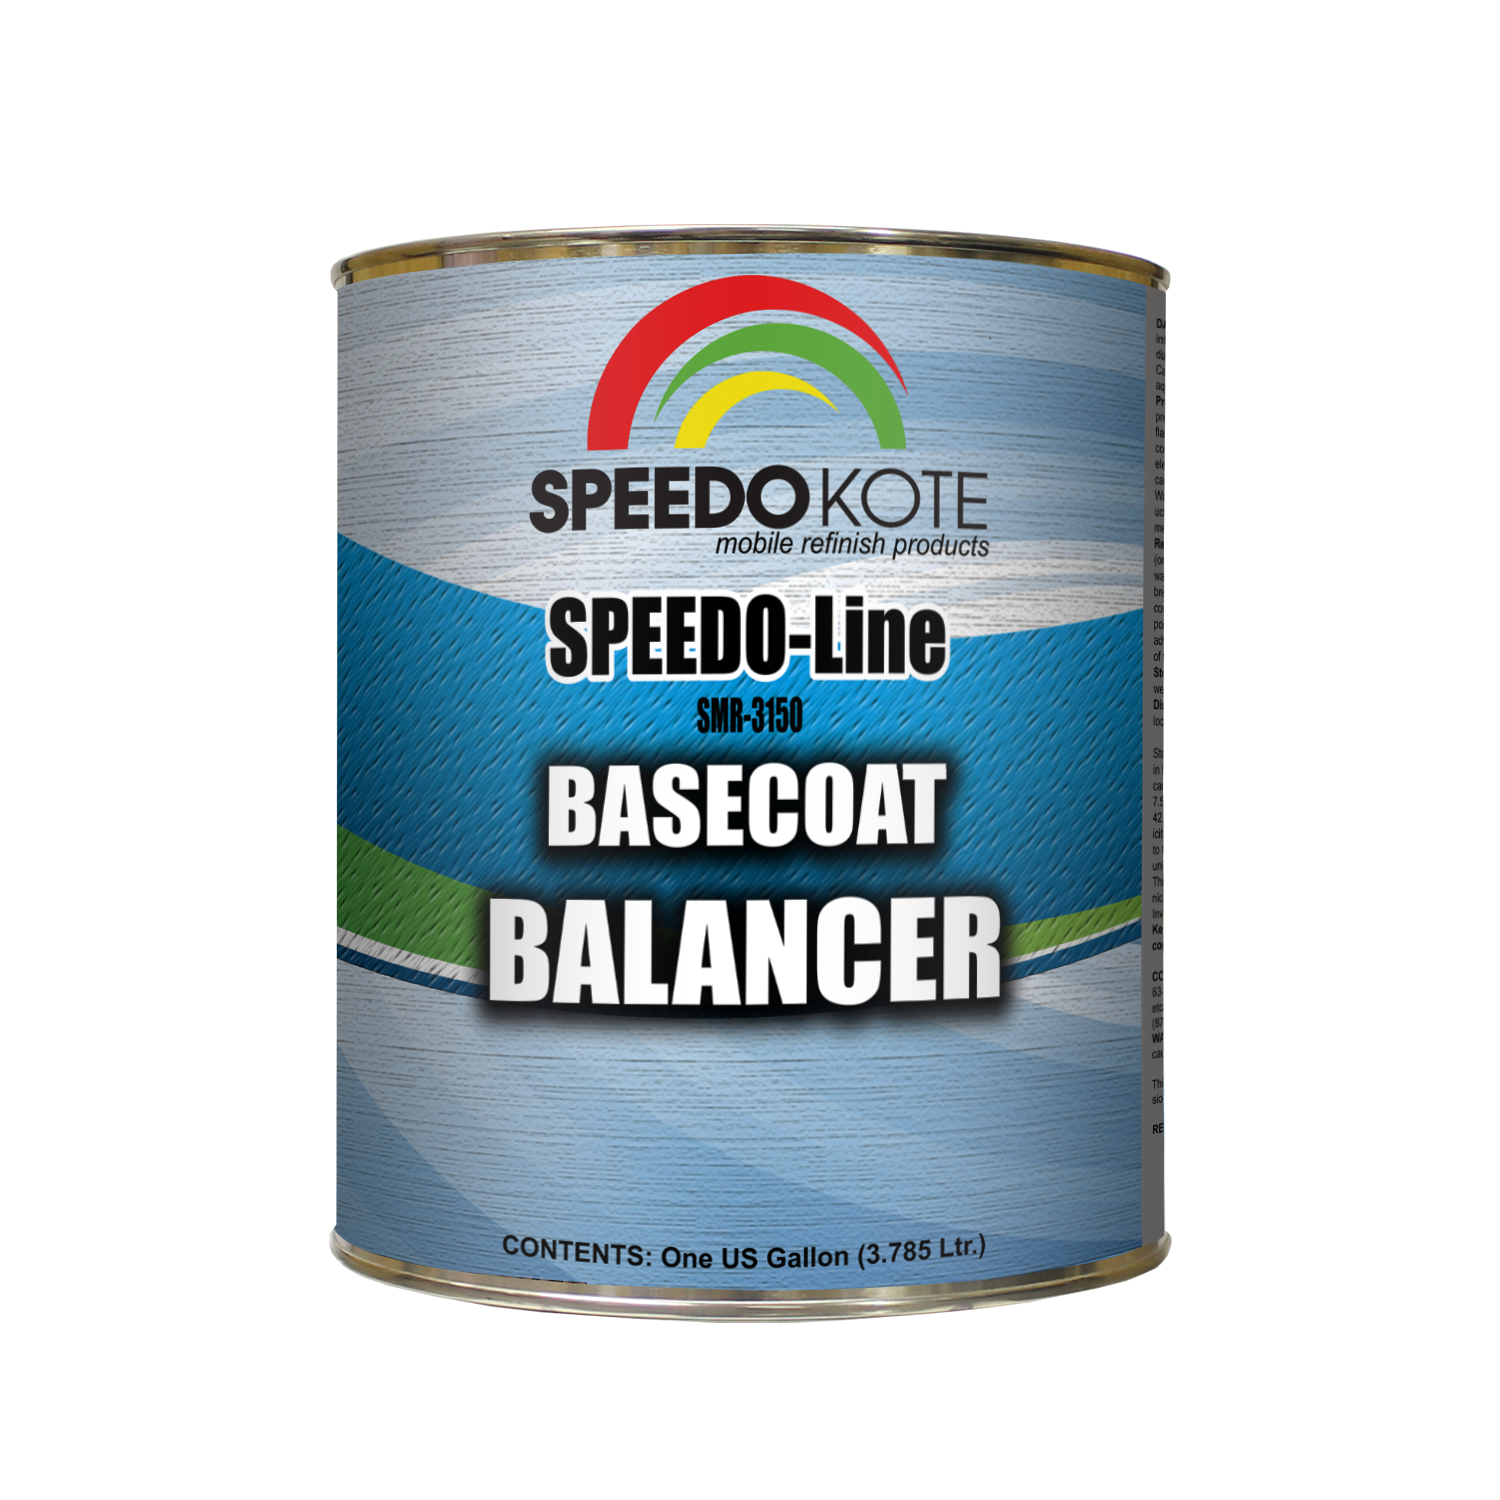 Basecoat Balancer For Use In Automotive Base Coats , One Gallon Smr-3150